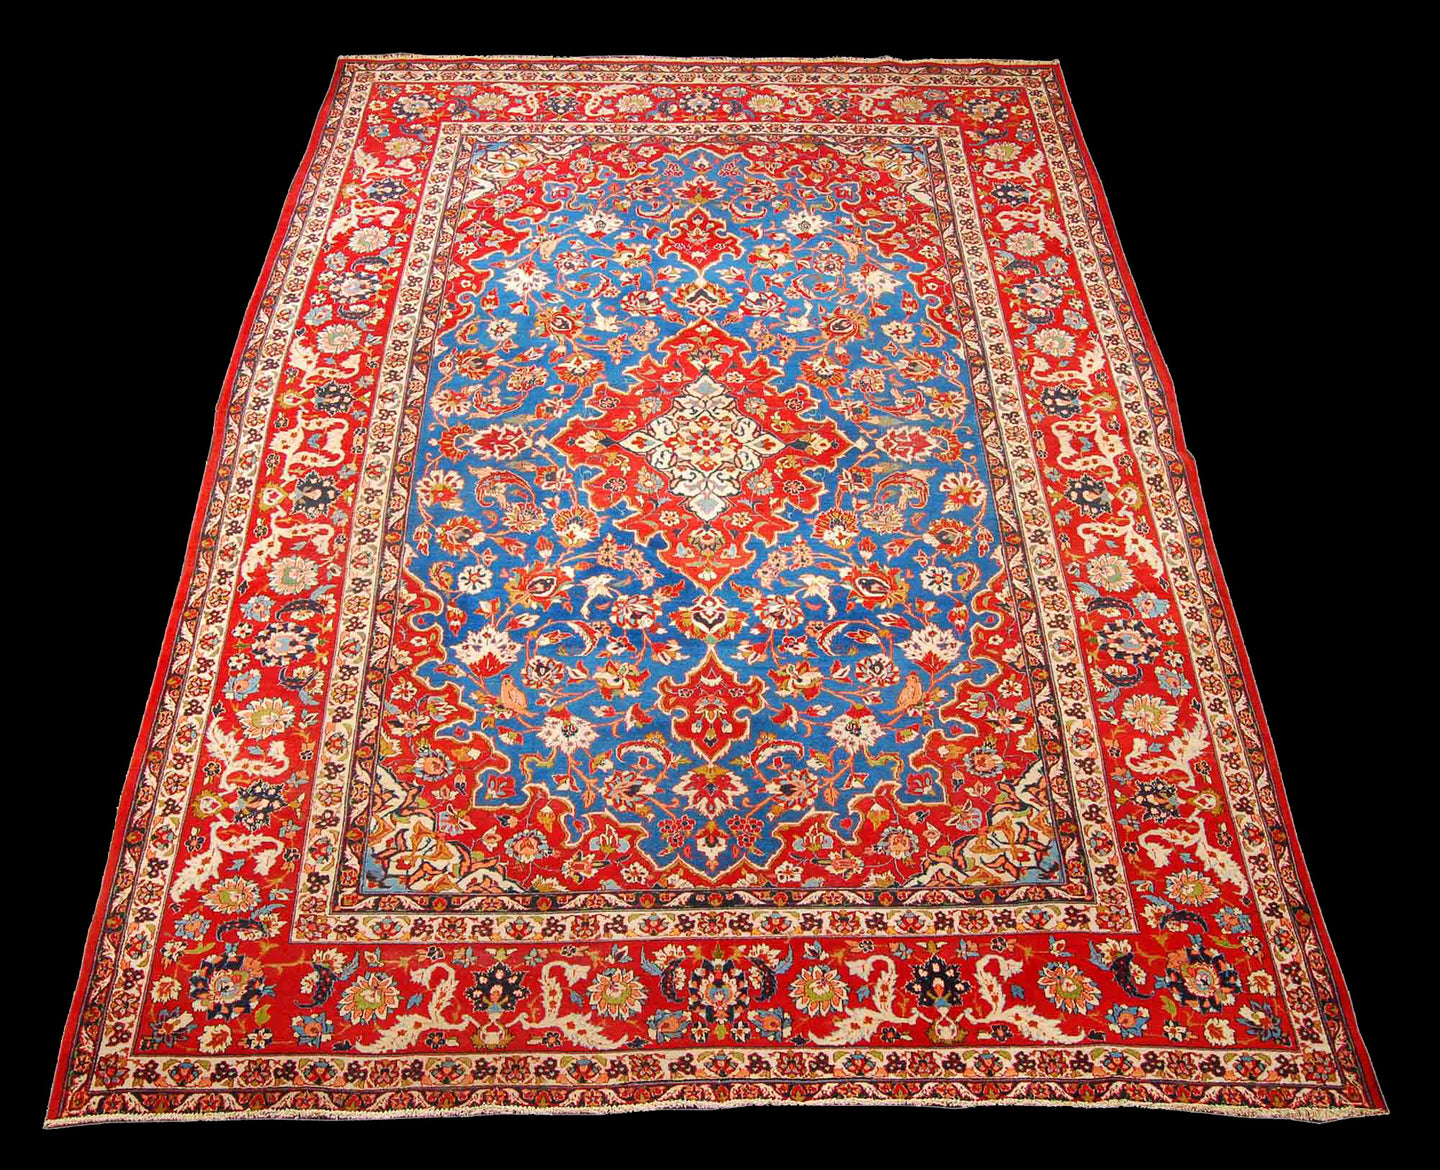 Authentic original hand knotted carpet 370x265 CM